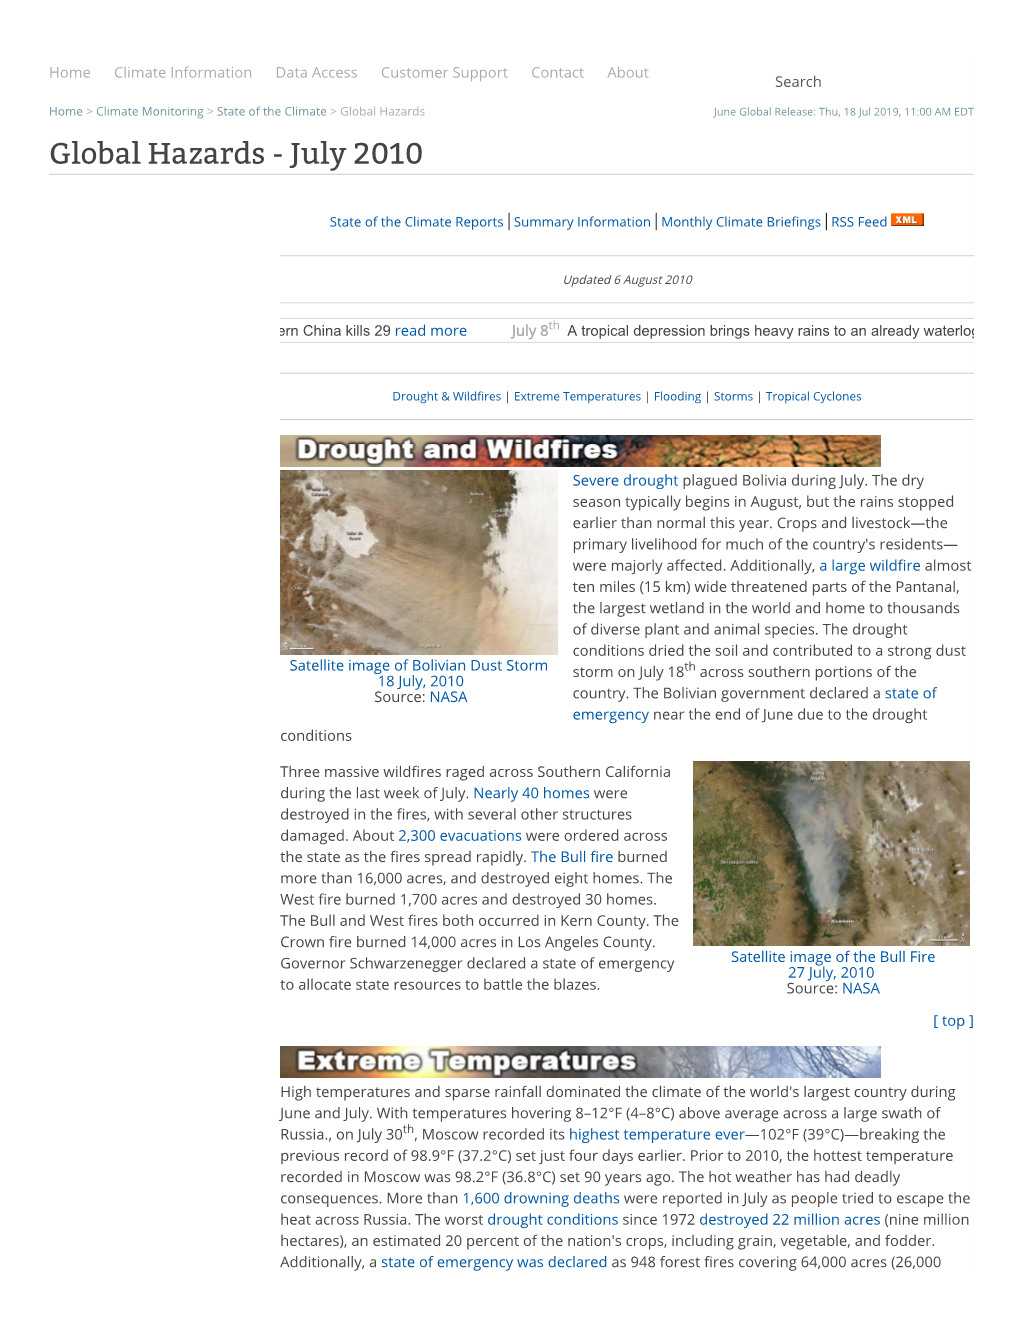 Global Hazards June Global Release: Thu, 18 Jul 2019, 11:00 AM EDT Global Hazards - July 2010